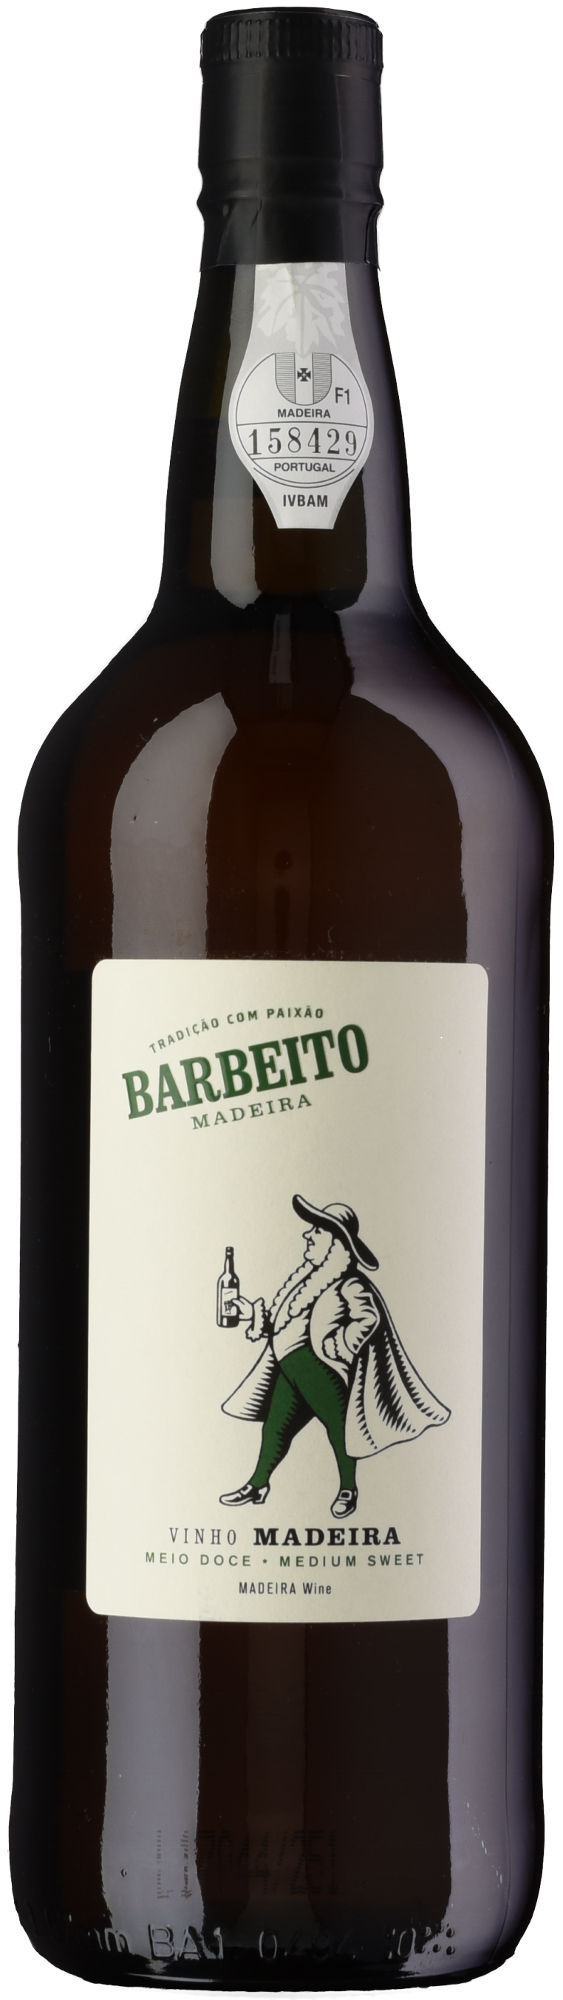 Barbeito-Meio-Doce-Madeira-1l